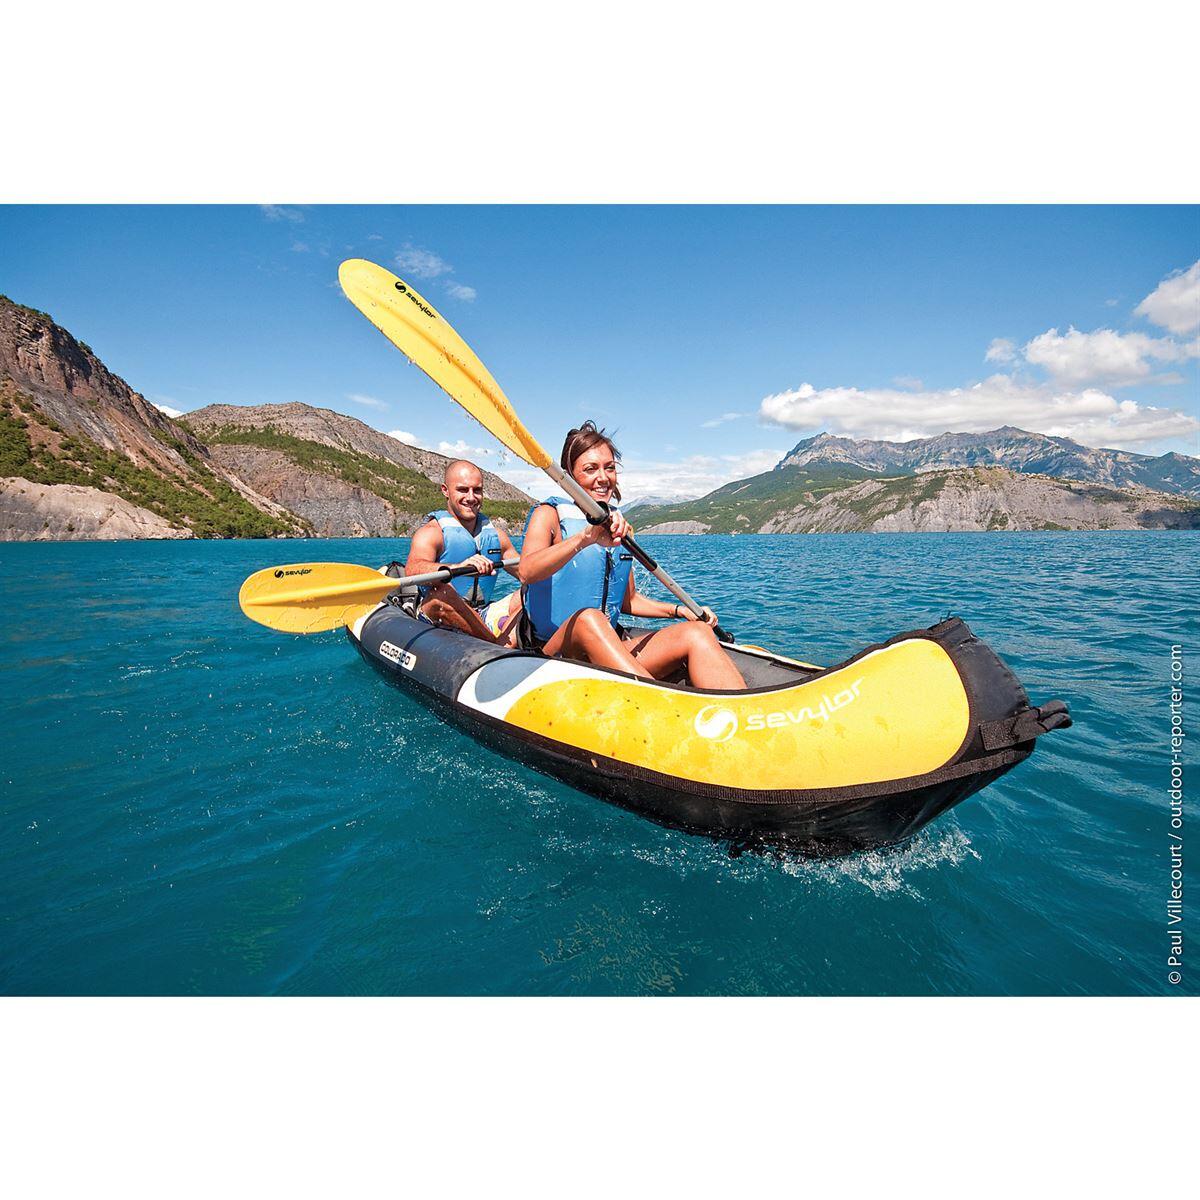 Colorado 2 Person Inflatable Touring Kayak - Yellow 5/6